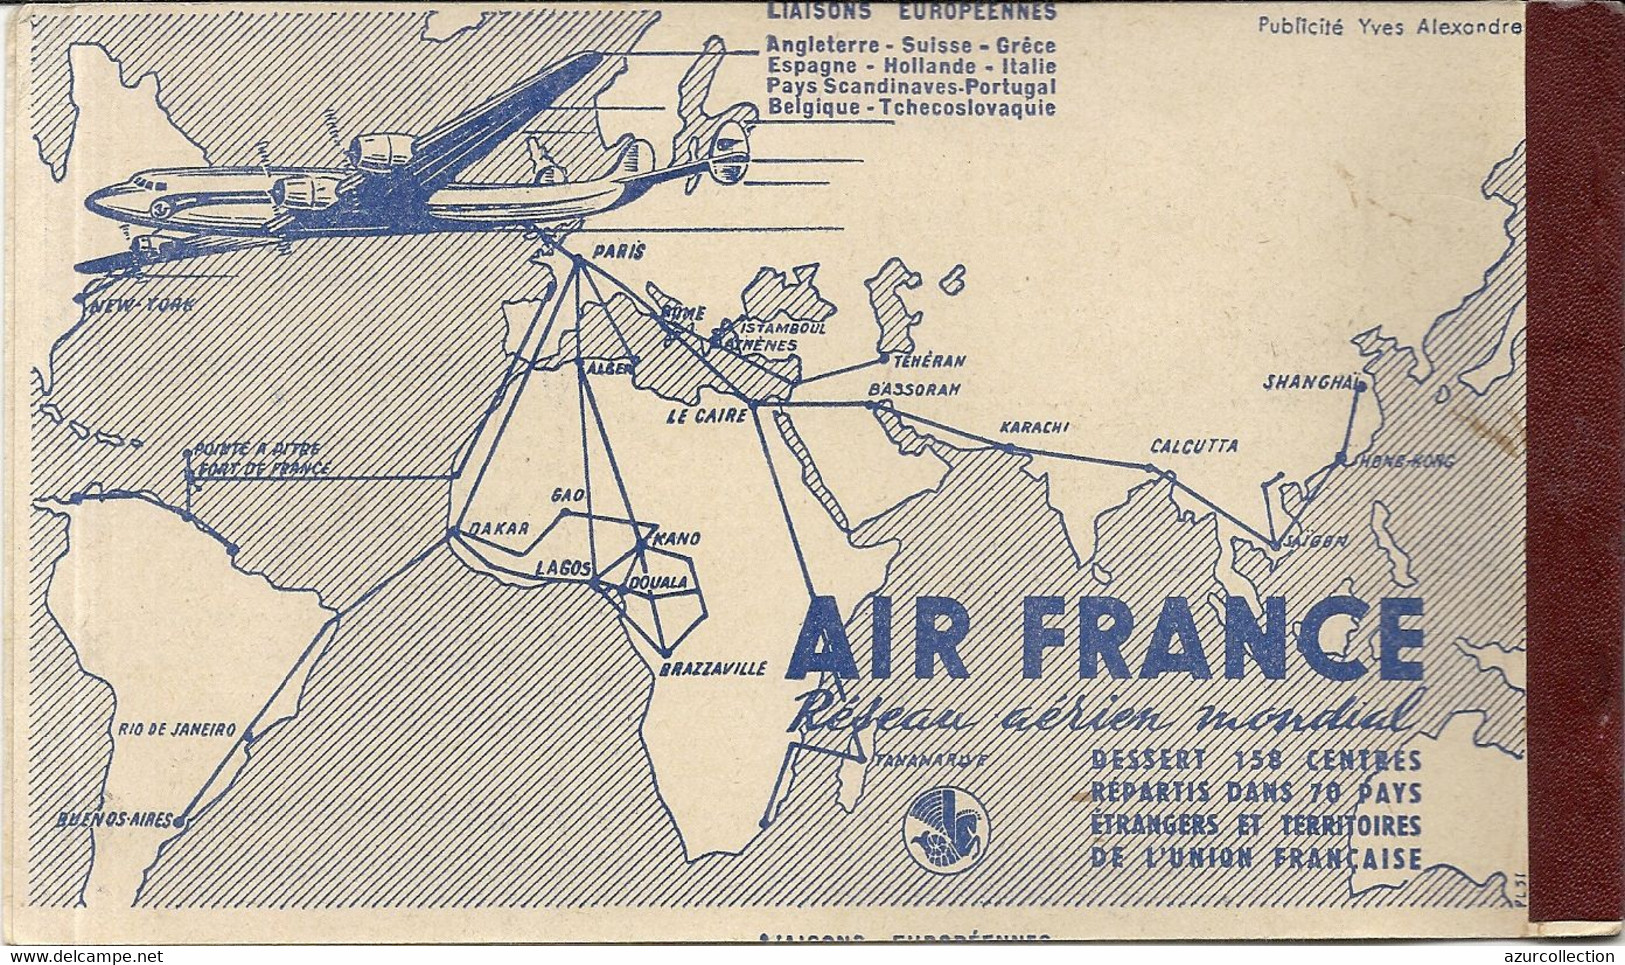 BILLET AIR FRANCE POUR CONAKRY . 1952 - Biglietti